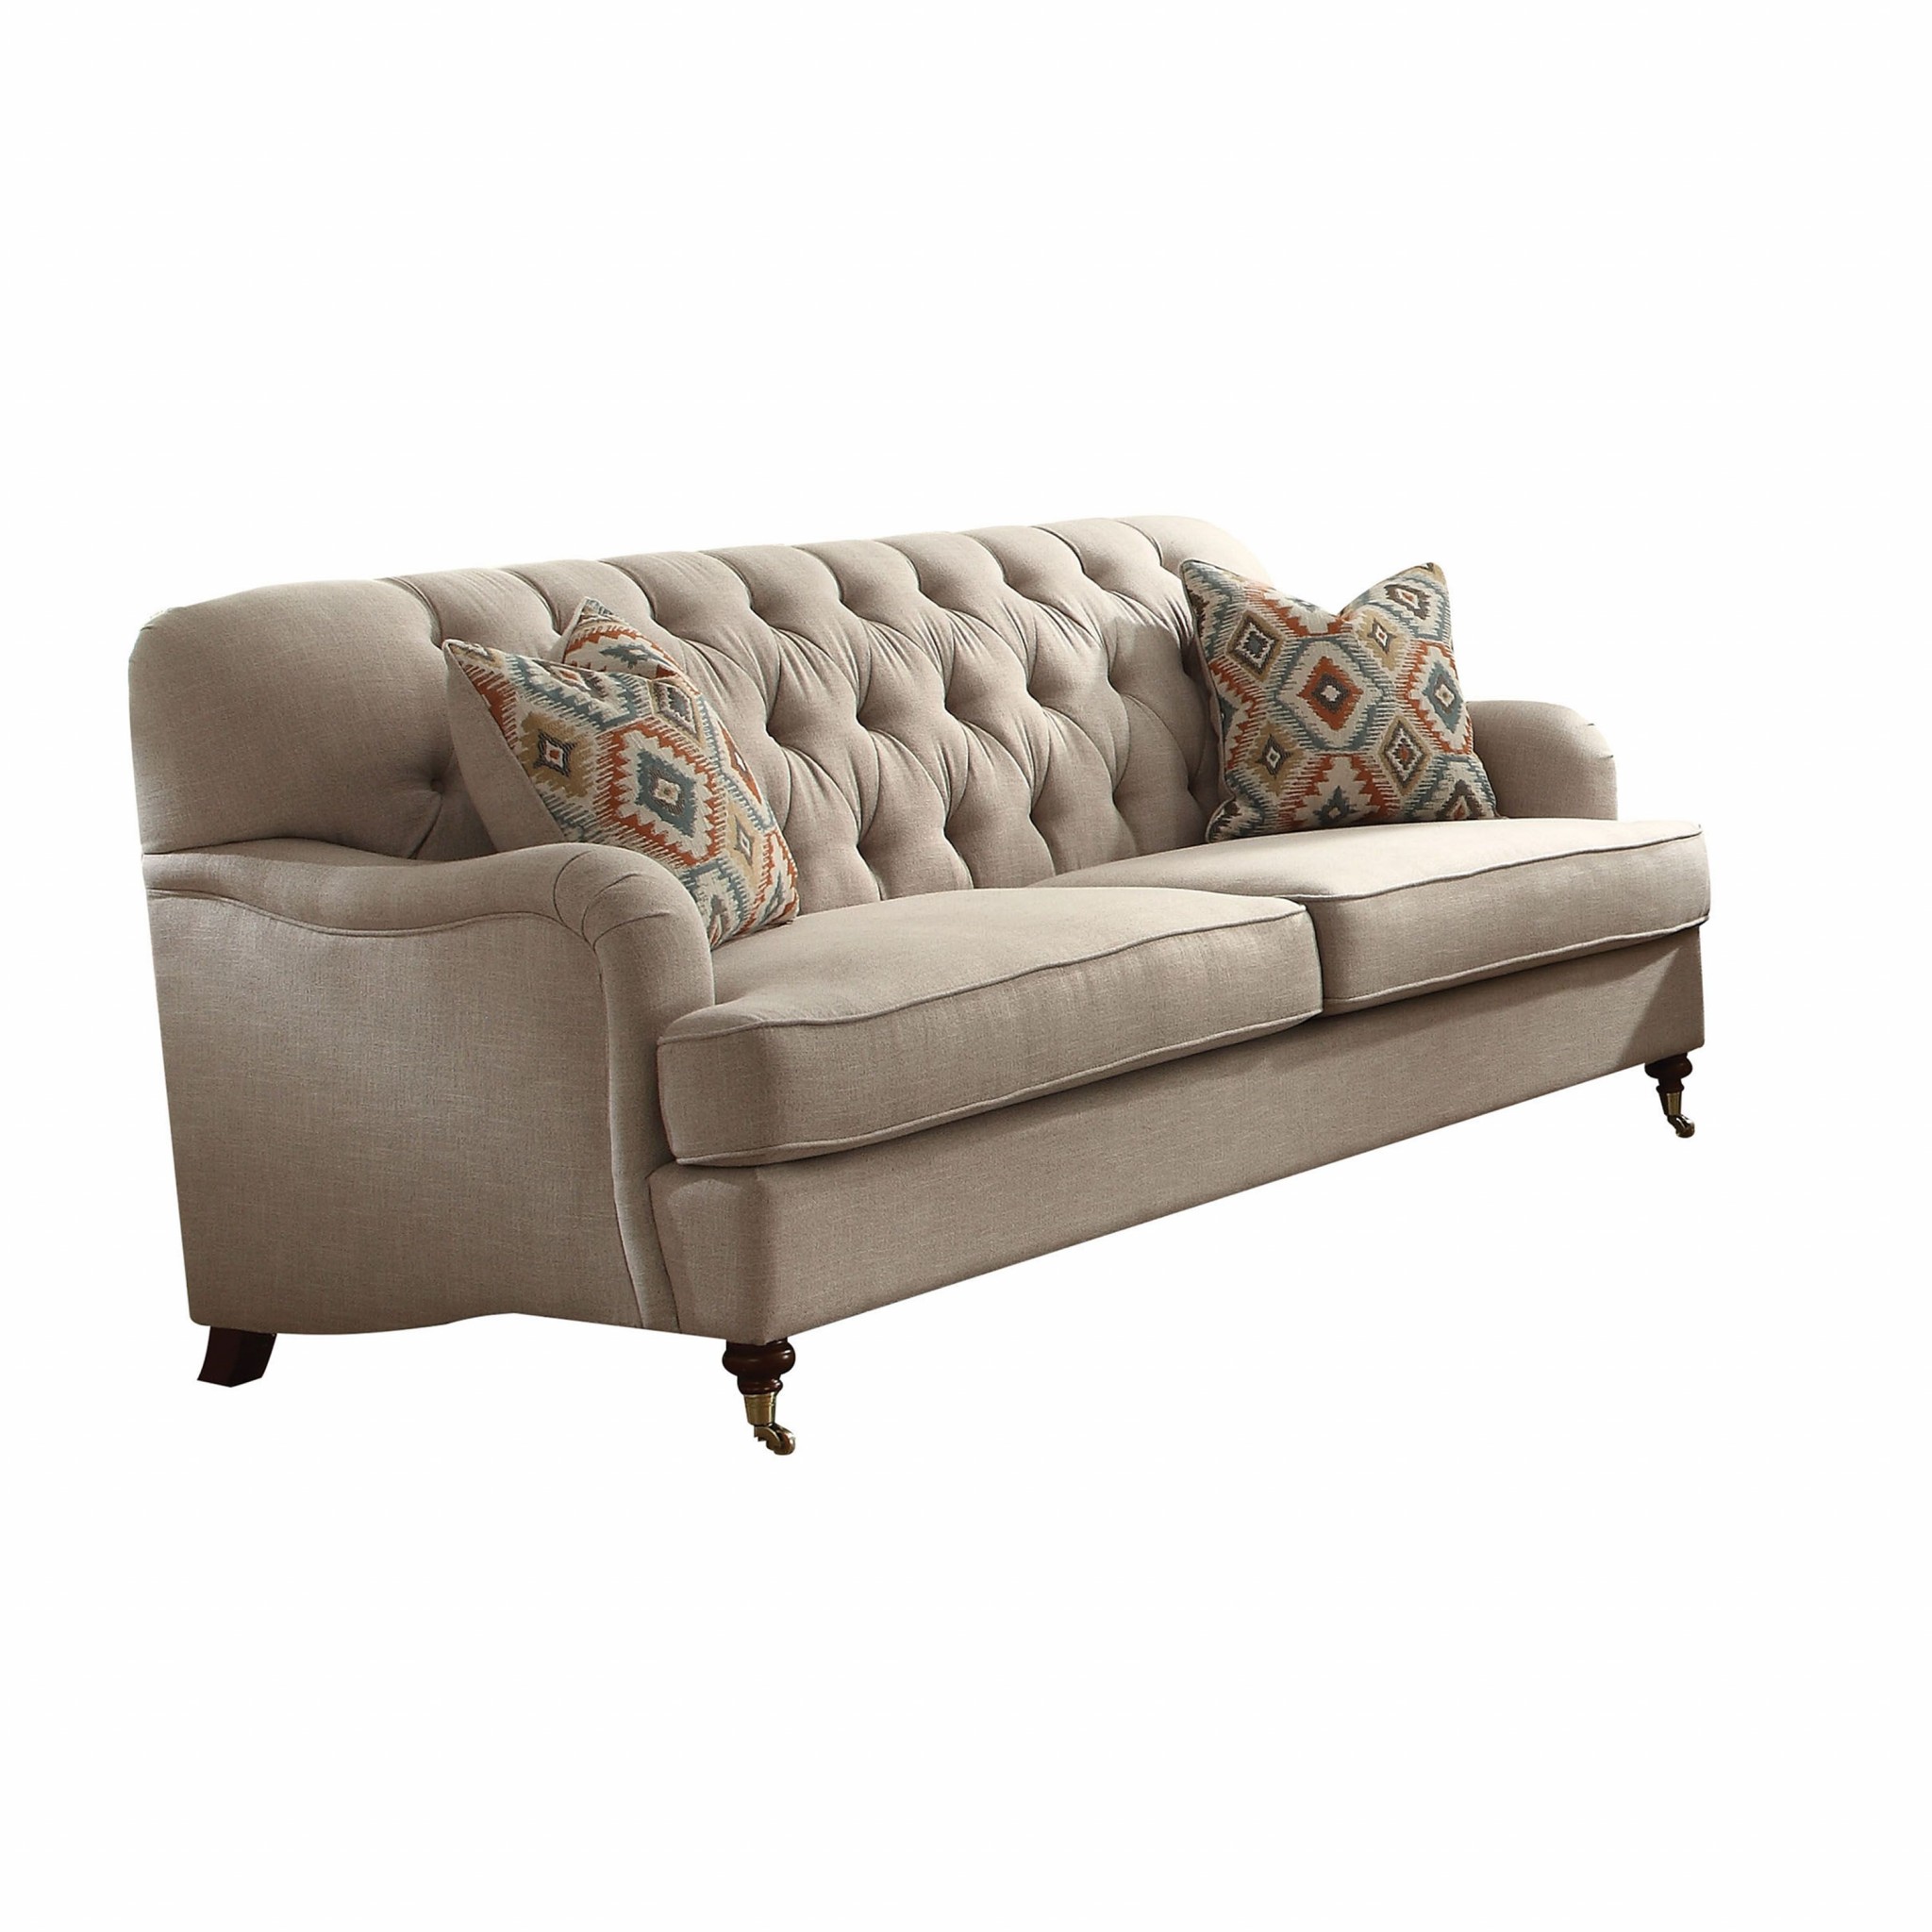 38" X 85" X 37" Beige Fabric Upholstery Sofa w/2 Pillows